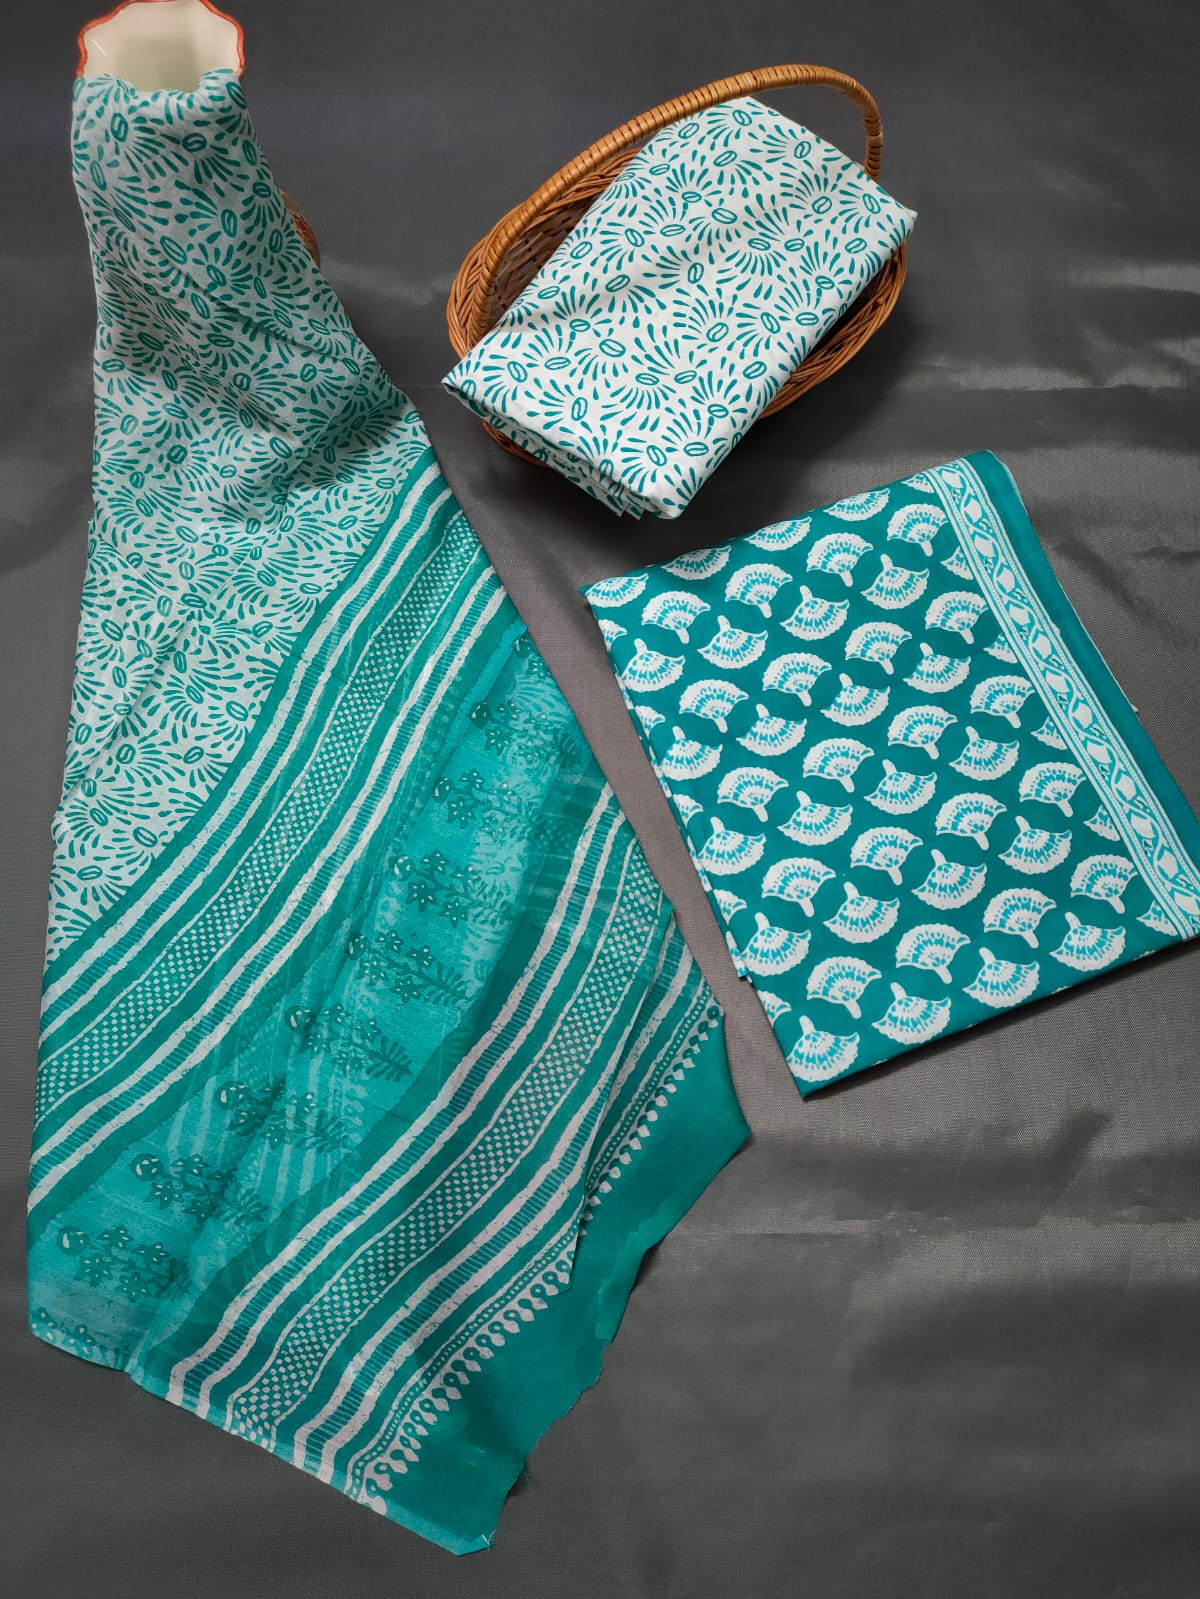 Jaipuri Unstitched Dress Material Hand Block Printed Cotton Suit With Chiffon Dupatta - JB639